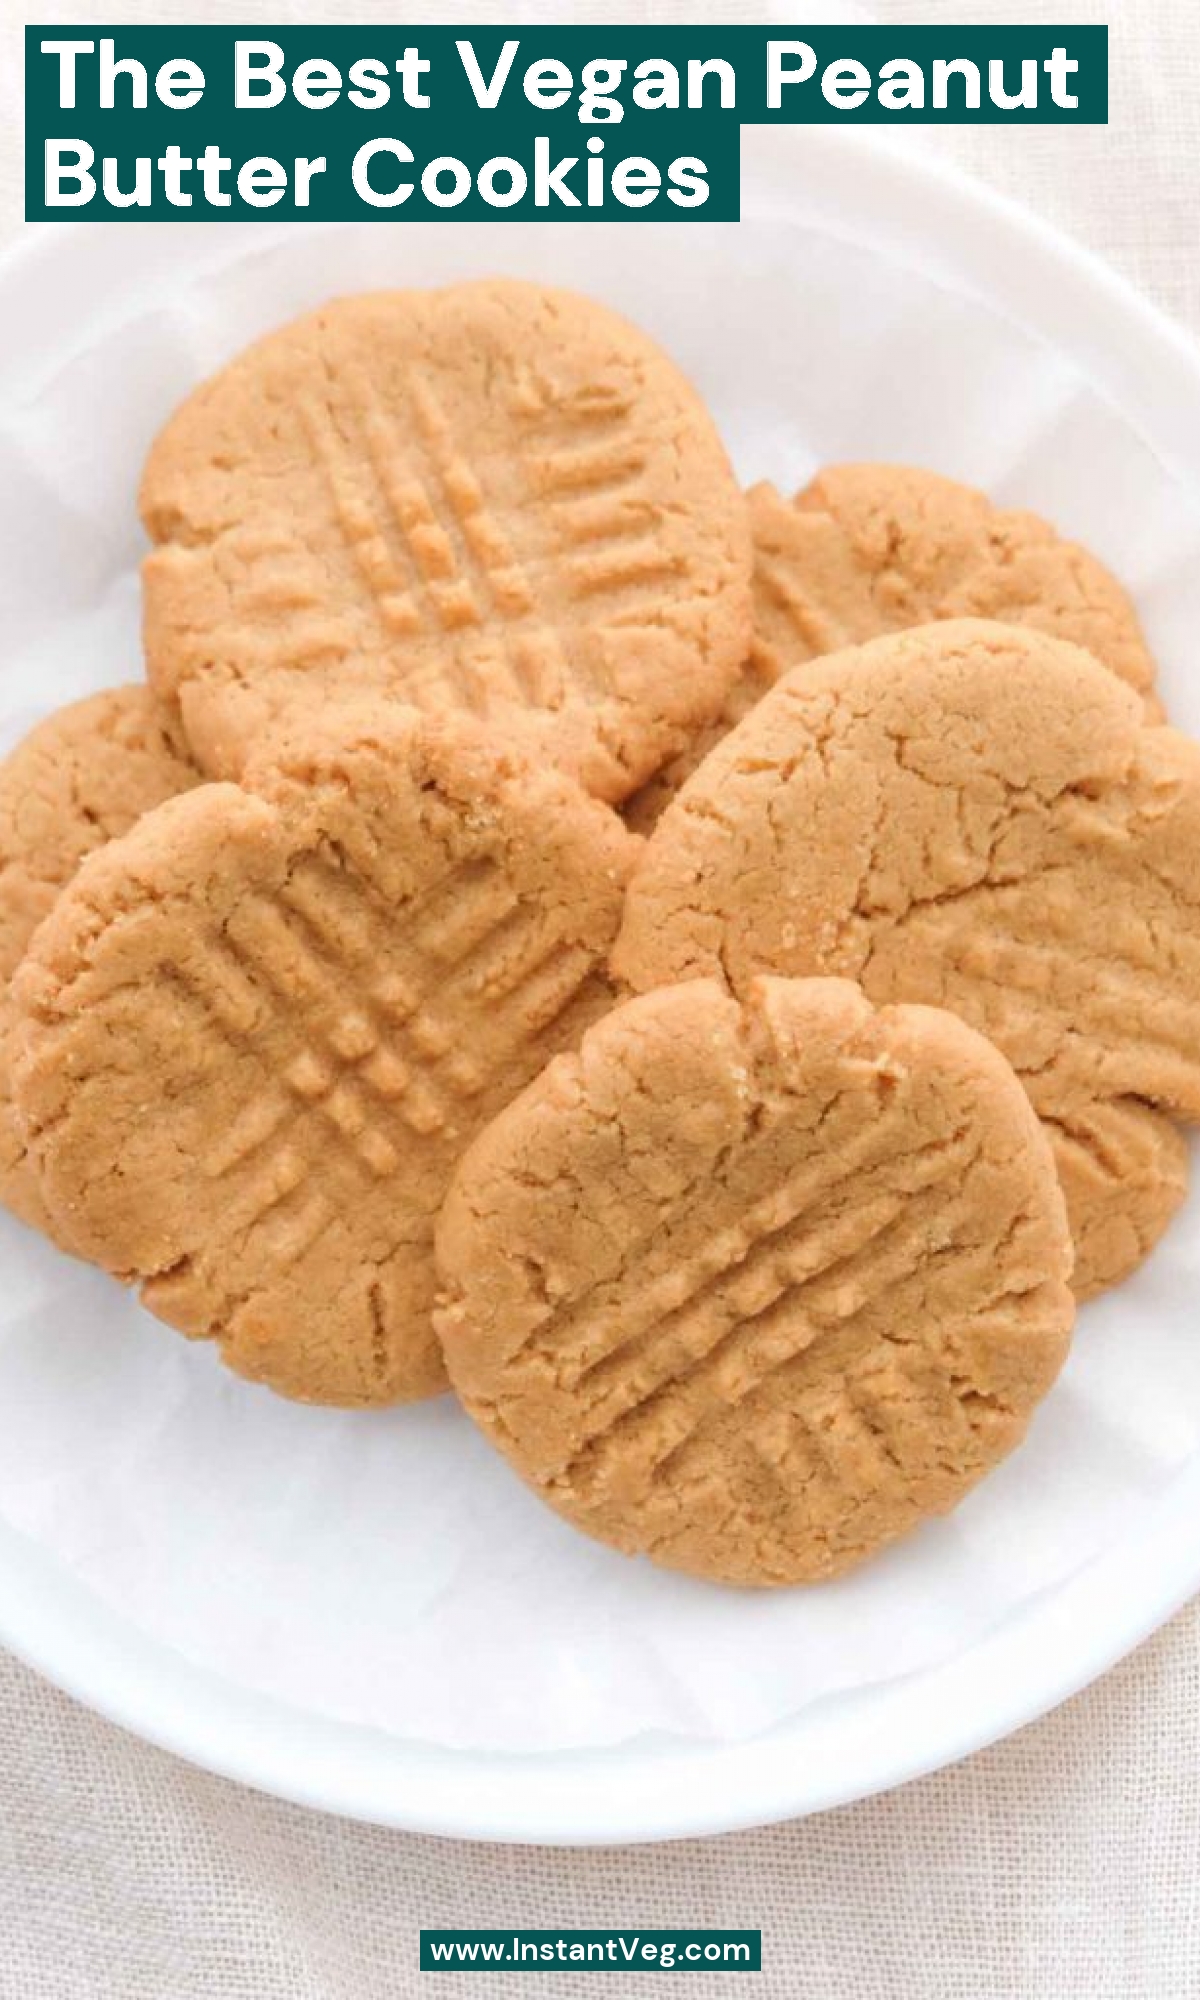 The Best Vegan Peanut Butter Cookies